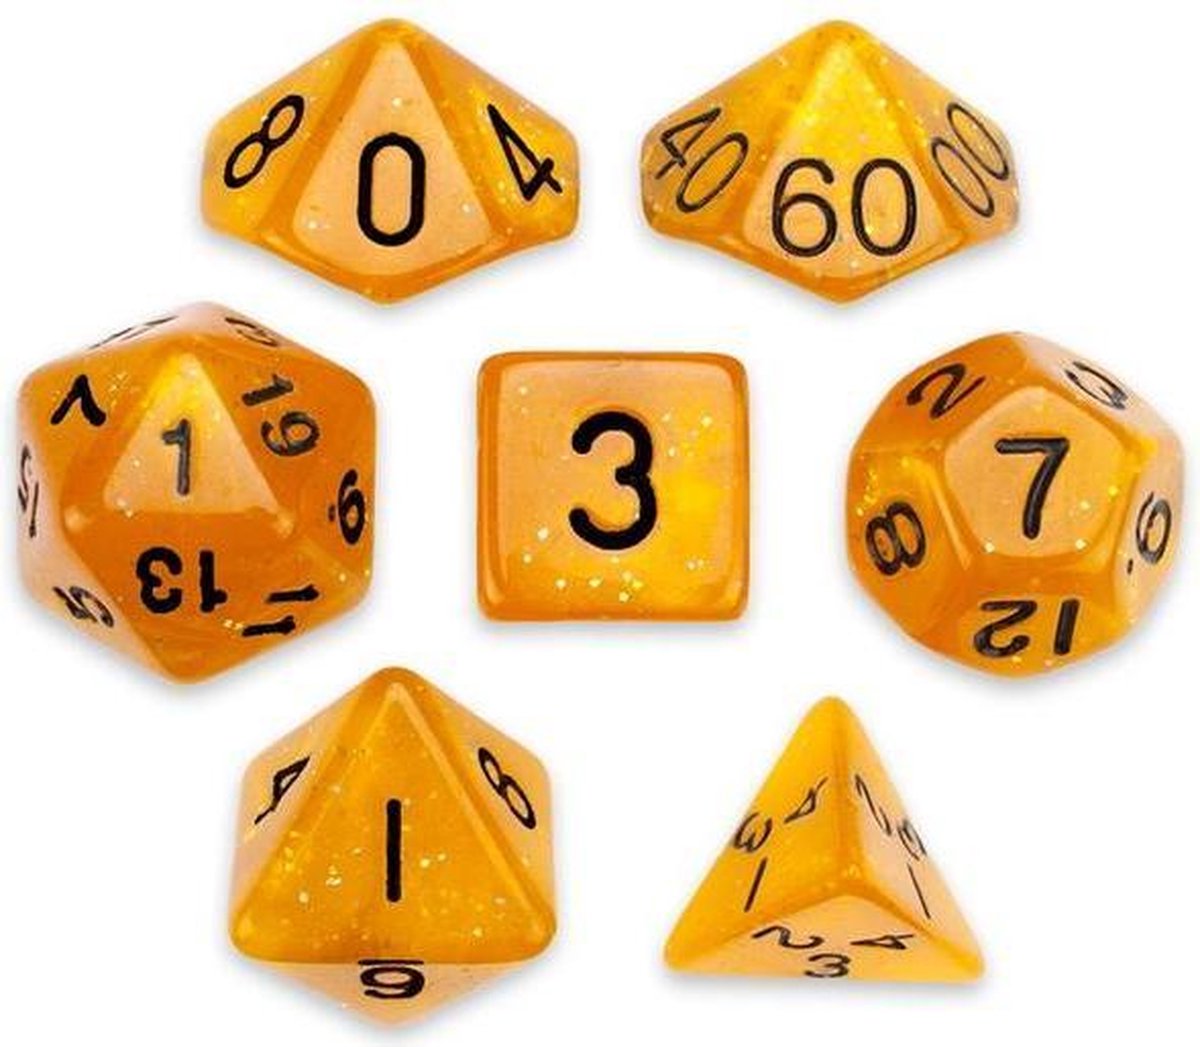 Polydice - Polyhedral dobbelstenen set 8 delig | Set van 7 in velours bewaarzakje / bag / pouch| dungeons and dragons dice | D&D  Pathfinder RPG | Oranje gespikkeld (galaxy)